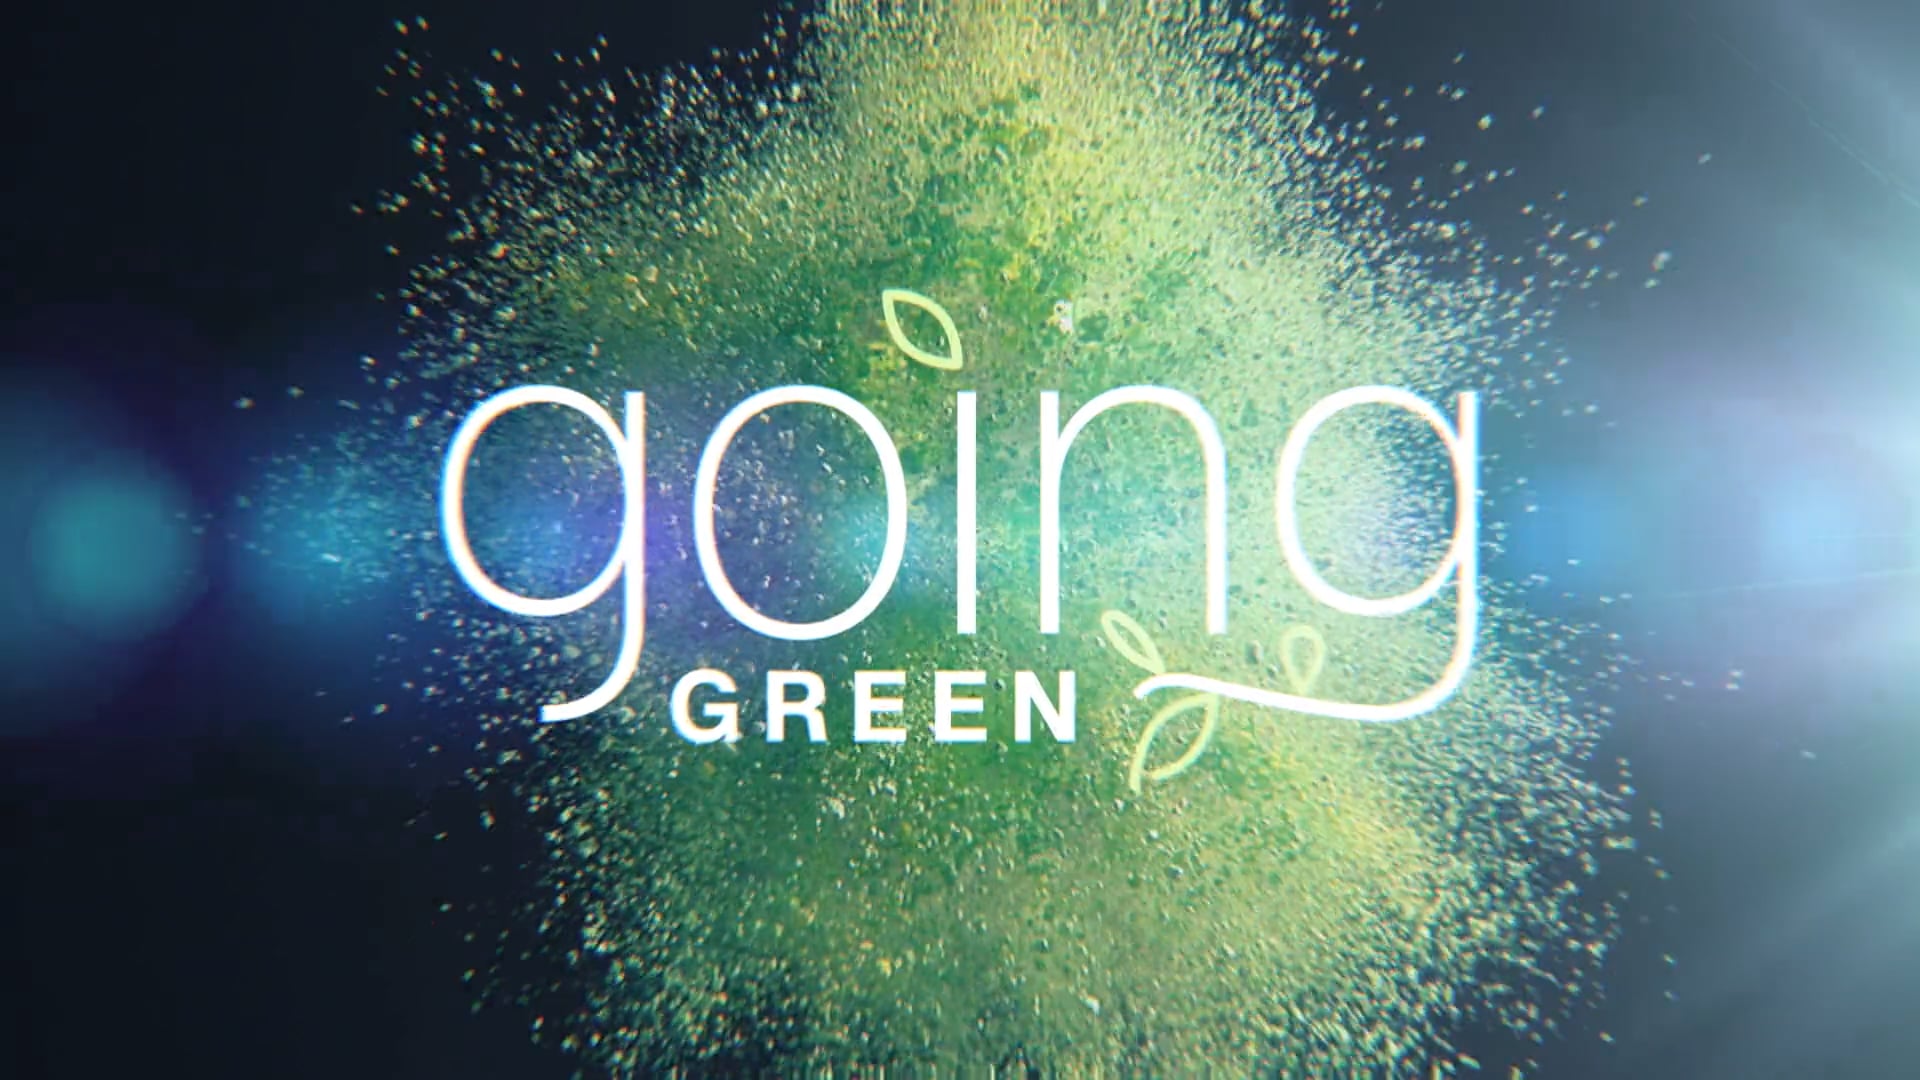 Creative Marketing Promo - Going Green